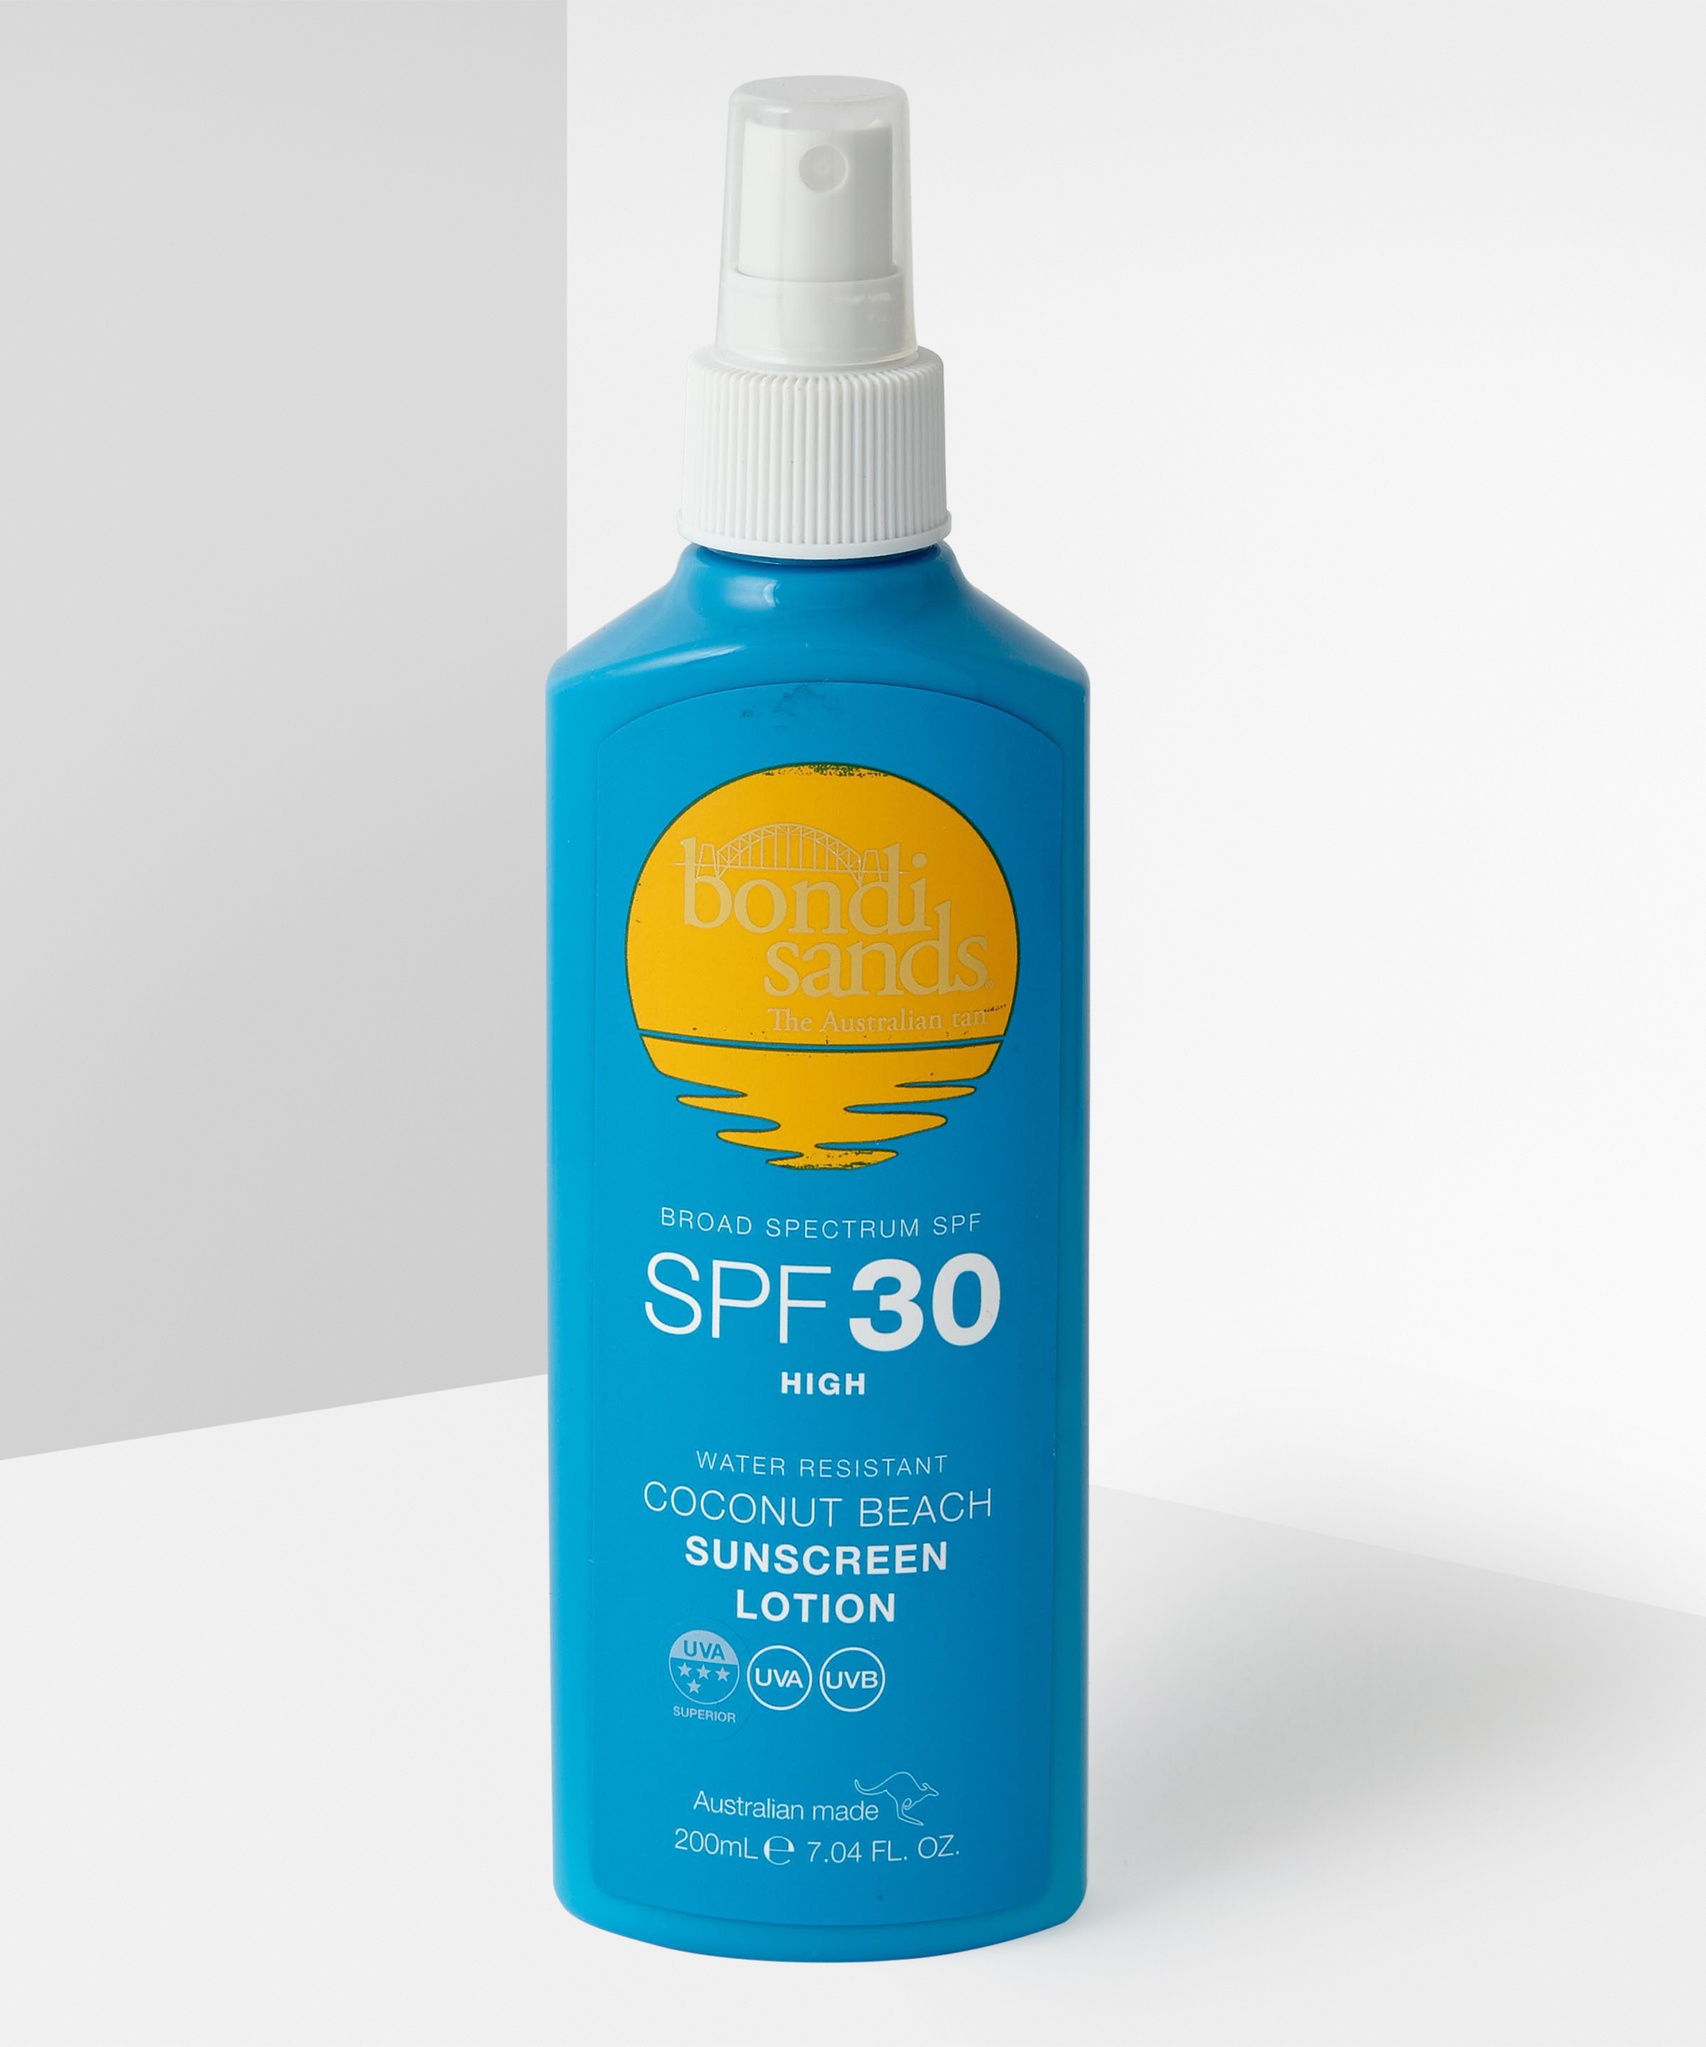 Bondi Sands Sunscreen Lotion Spf 30 Ingredients Explained